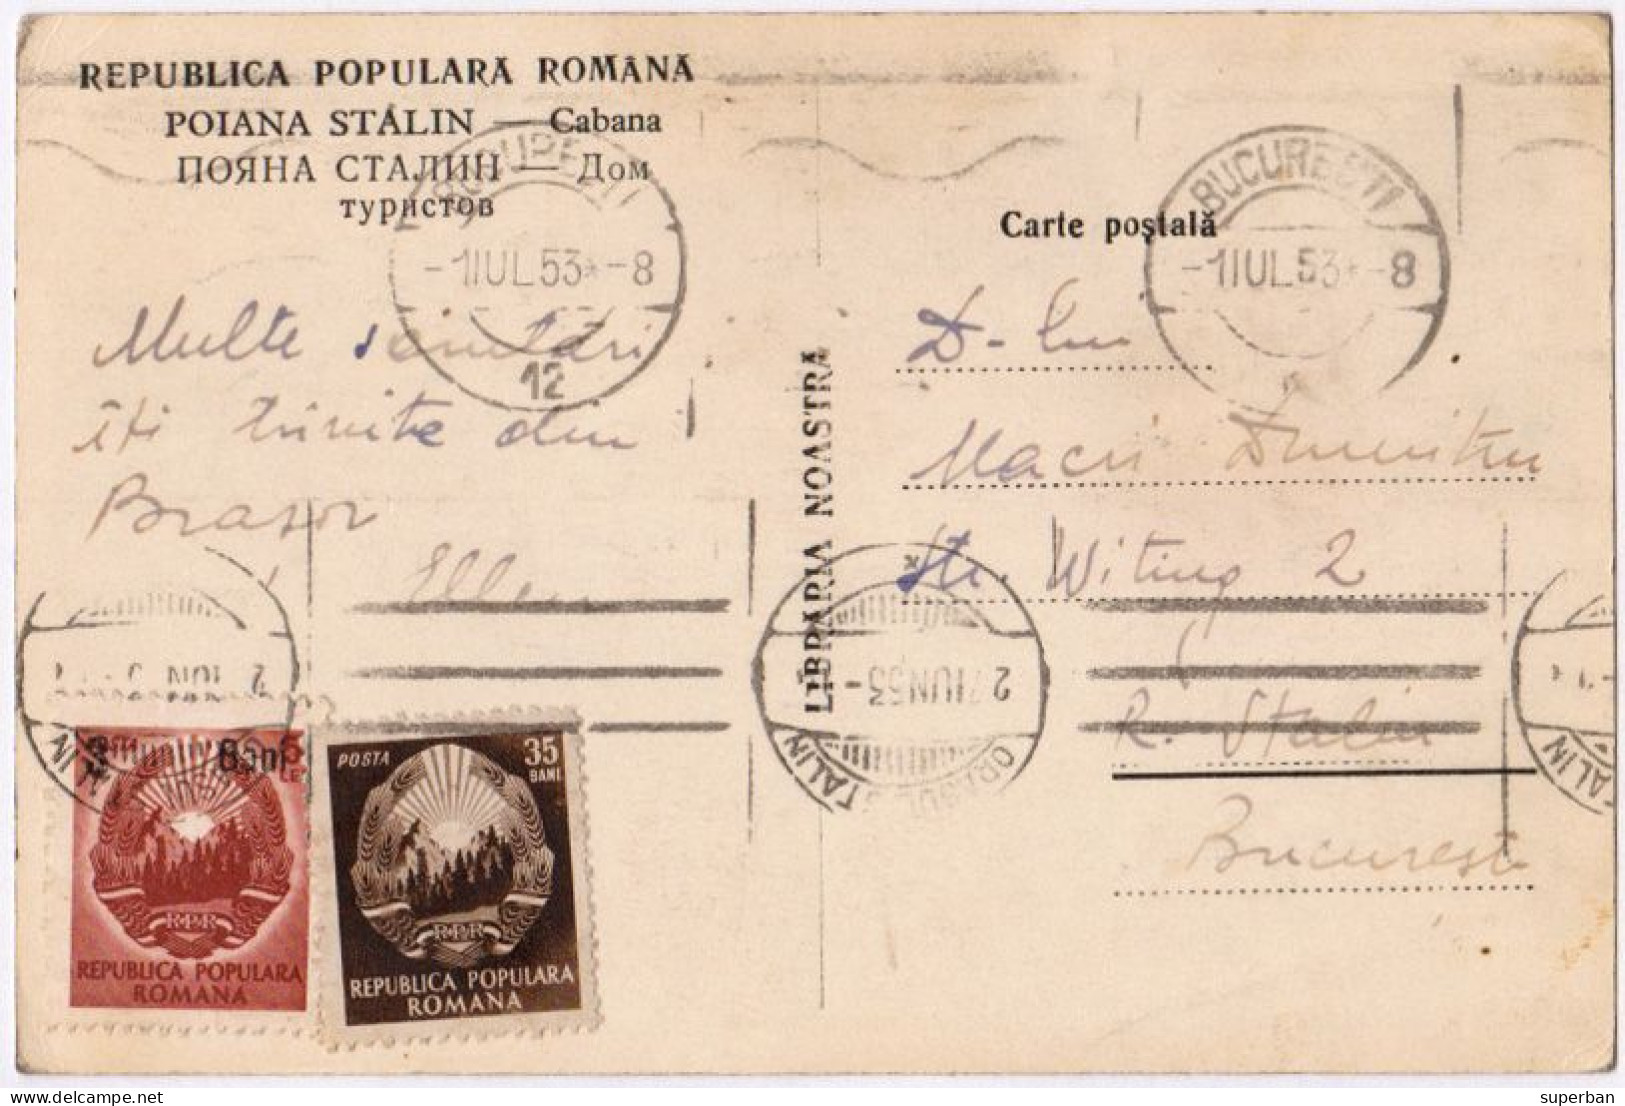 ROMANIA : 1952 - STABILIZAREA MONETARA / MONETARY STABILIZATION - LOT / SET : OVERPRINTED STAMPS on 6 POSTCARDS (al619)